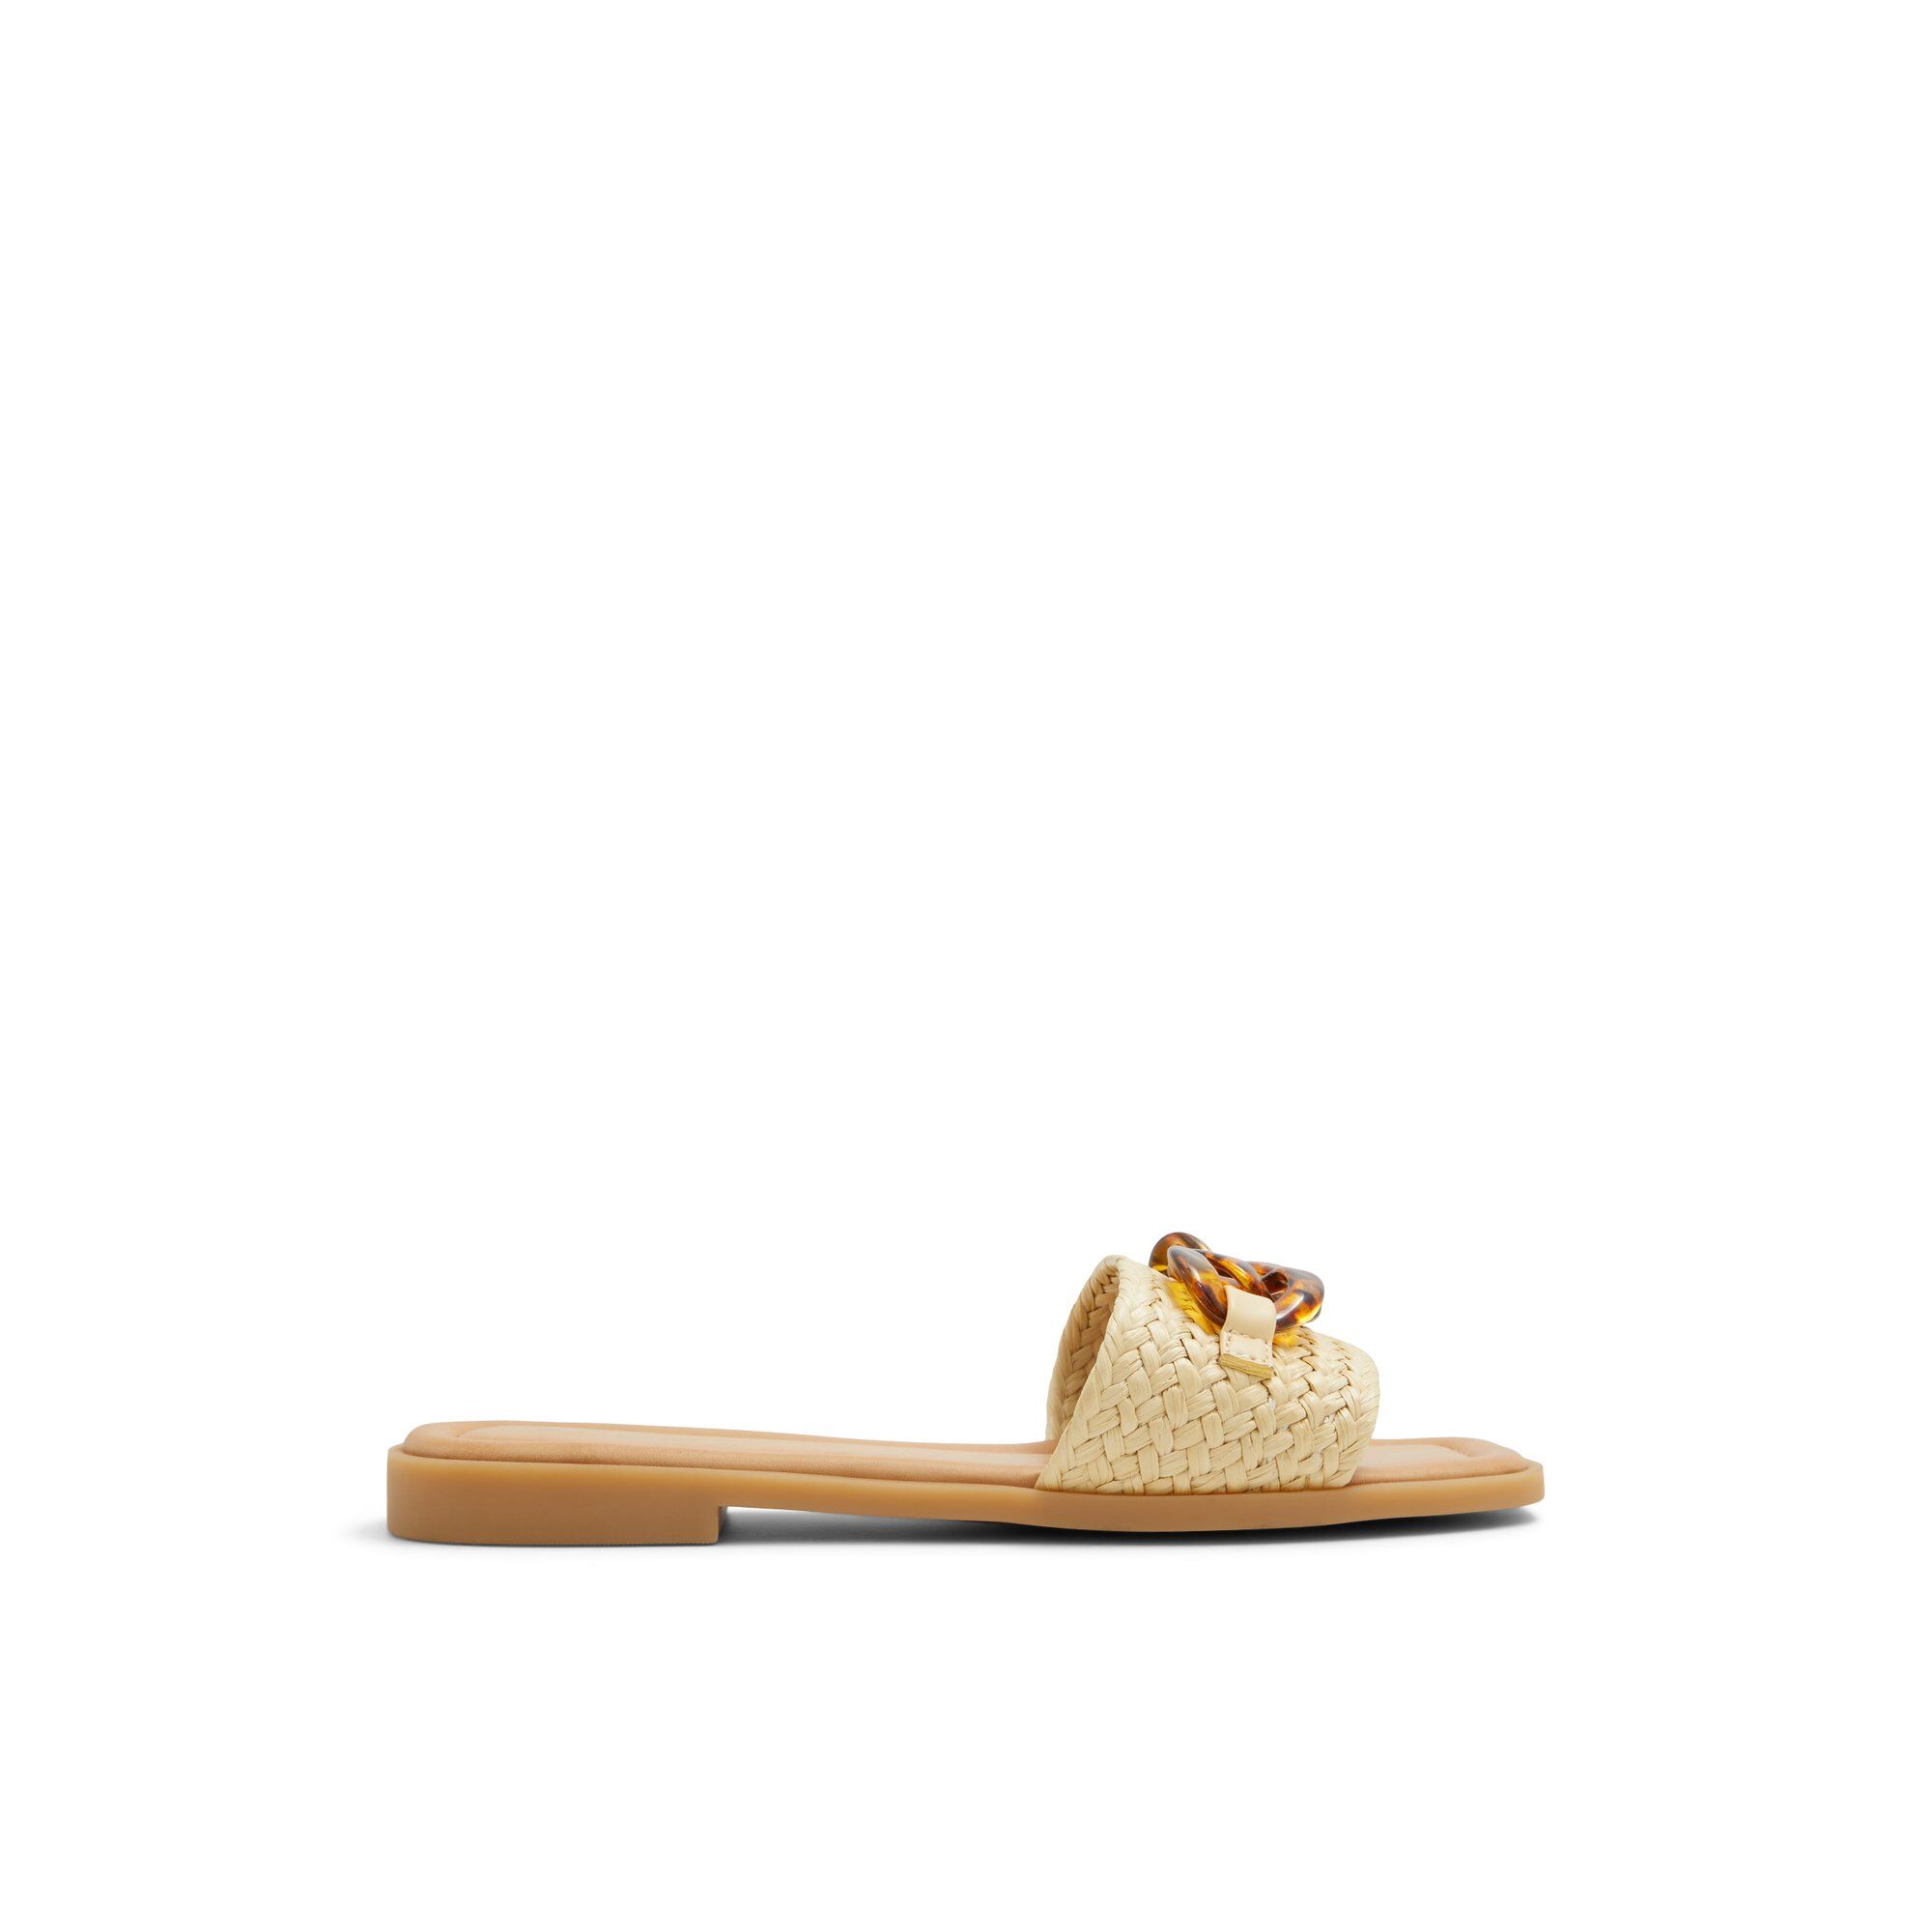 ALDO Ezie - Women's Flat Sandals - White, Size 7.5